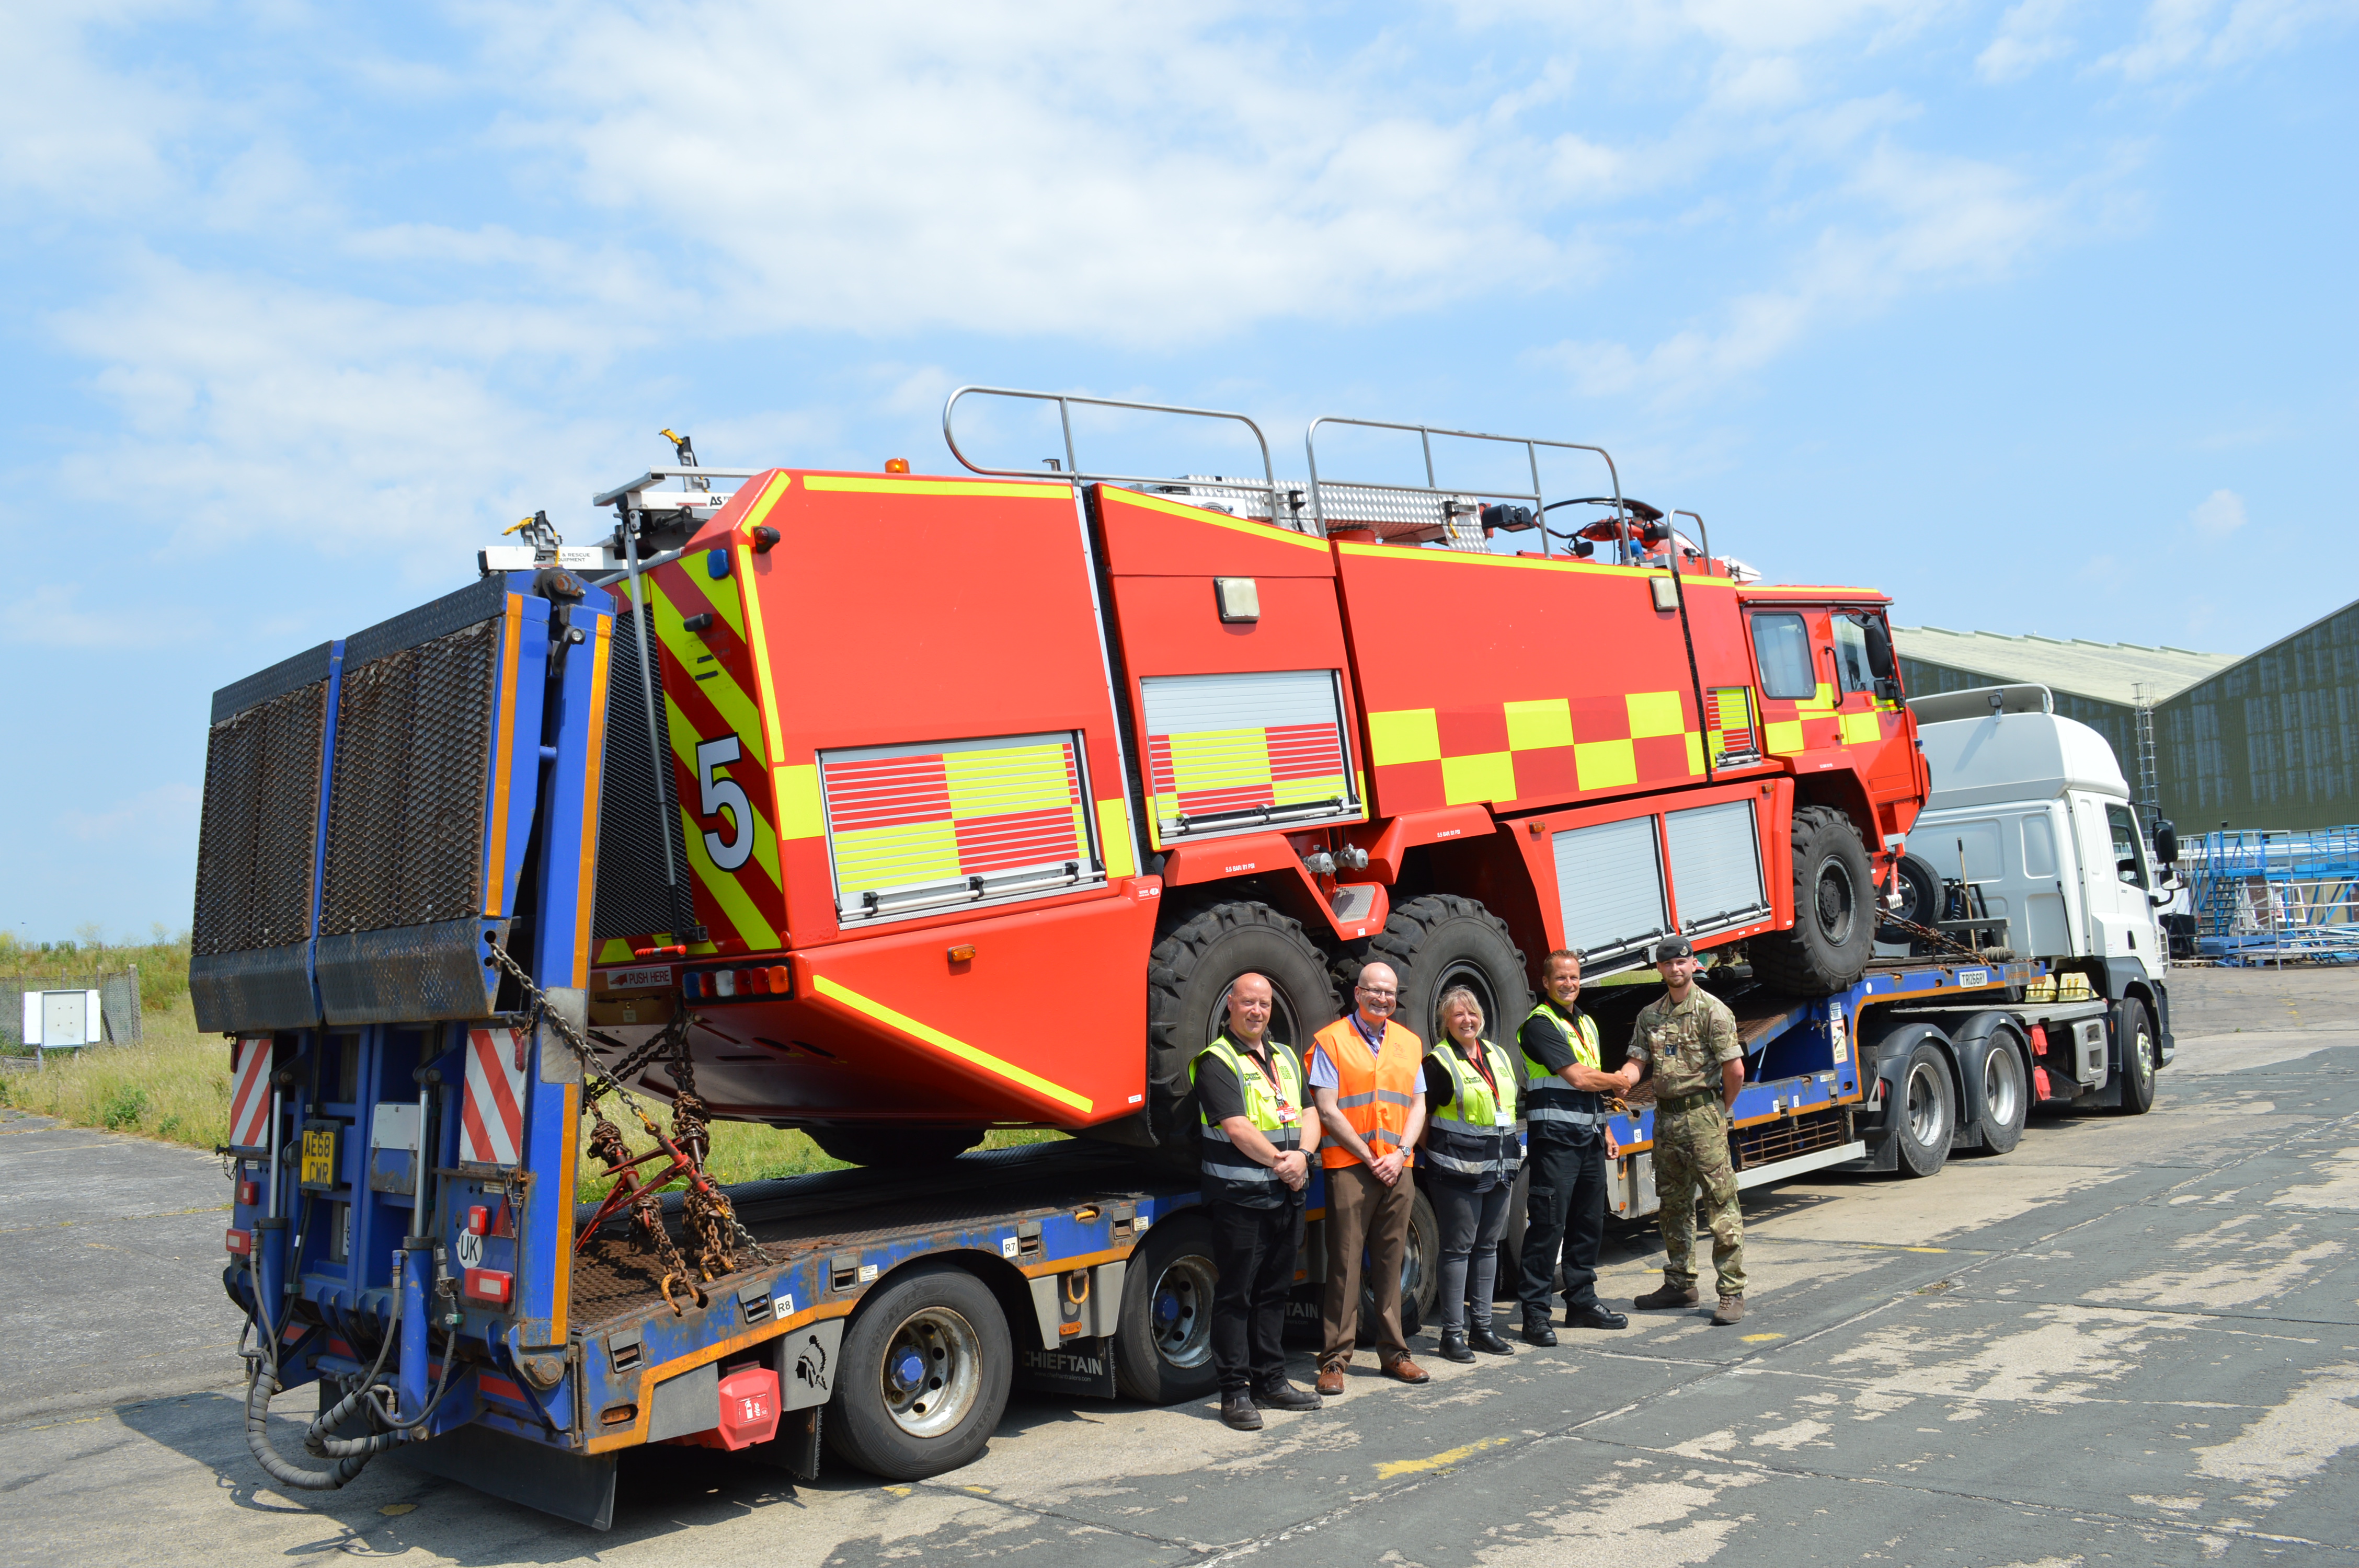 St Athen fire truck donation to Kharkiv Airport